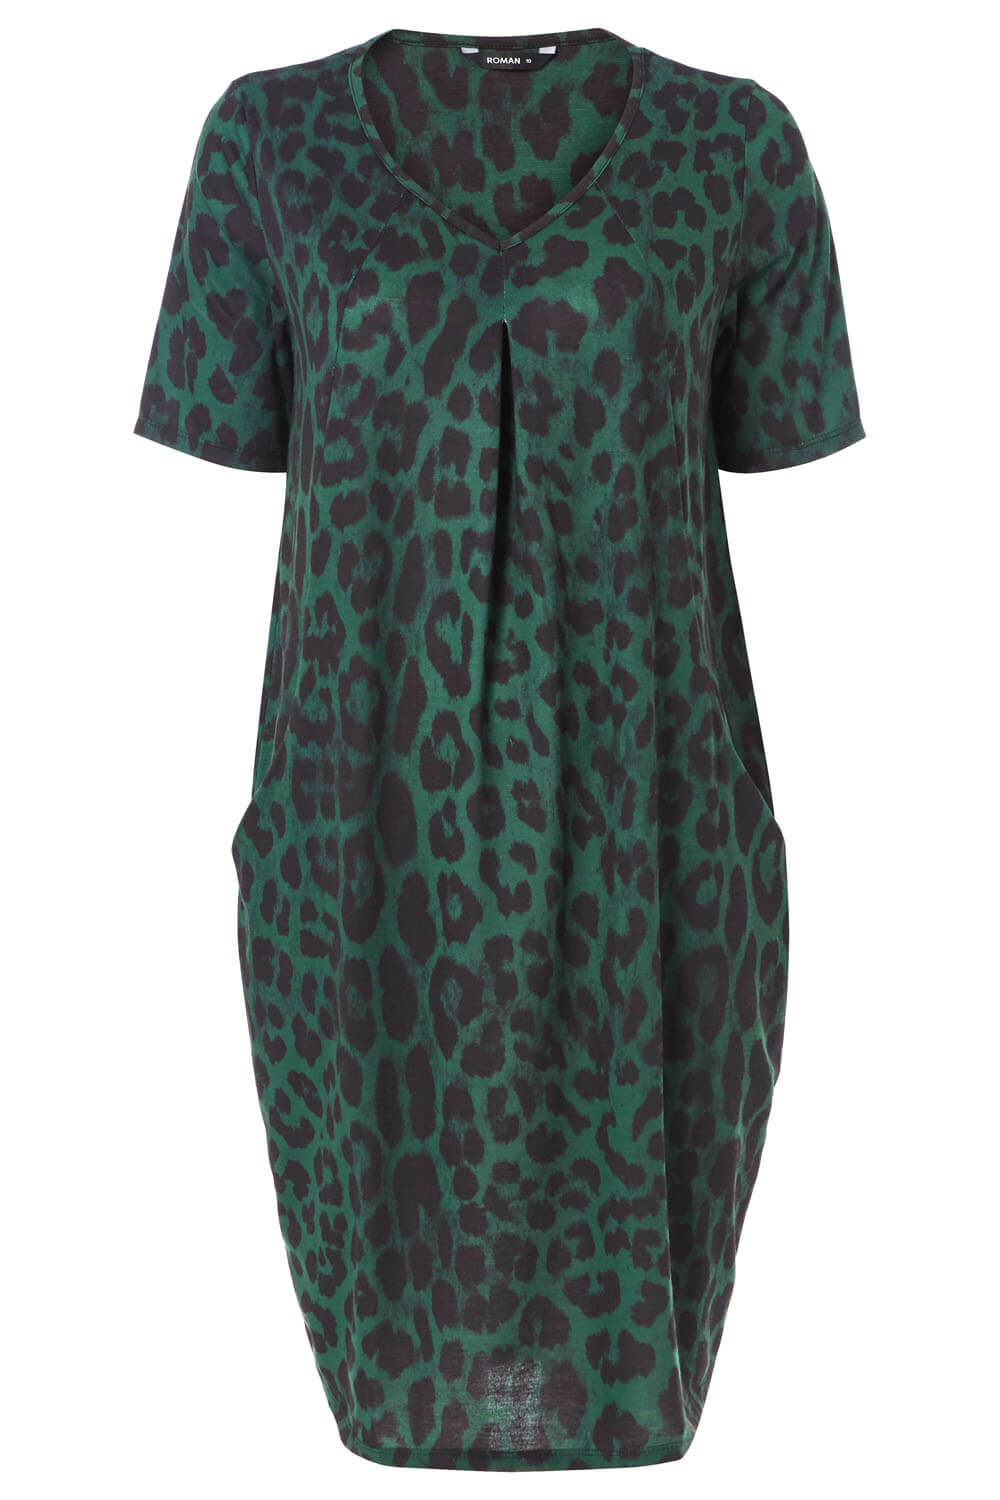 Green Animal Leopard Print Dress, Image 5 of 5